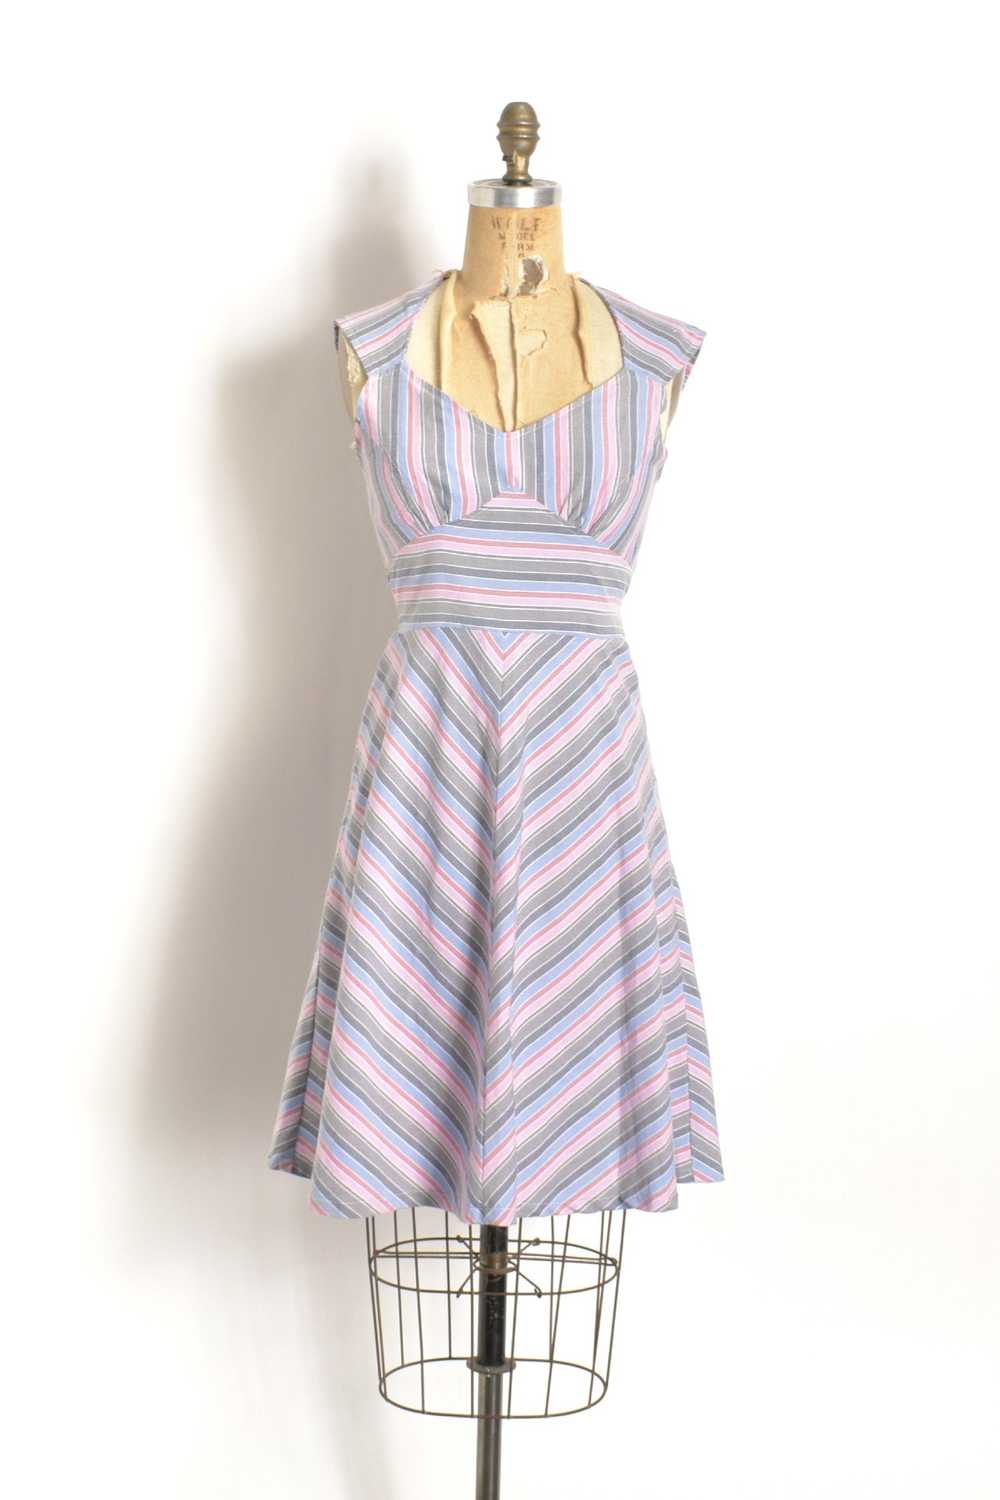 1970s Striped Hooded Dress-medium - image 8